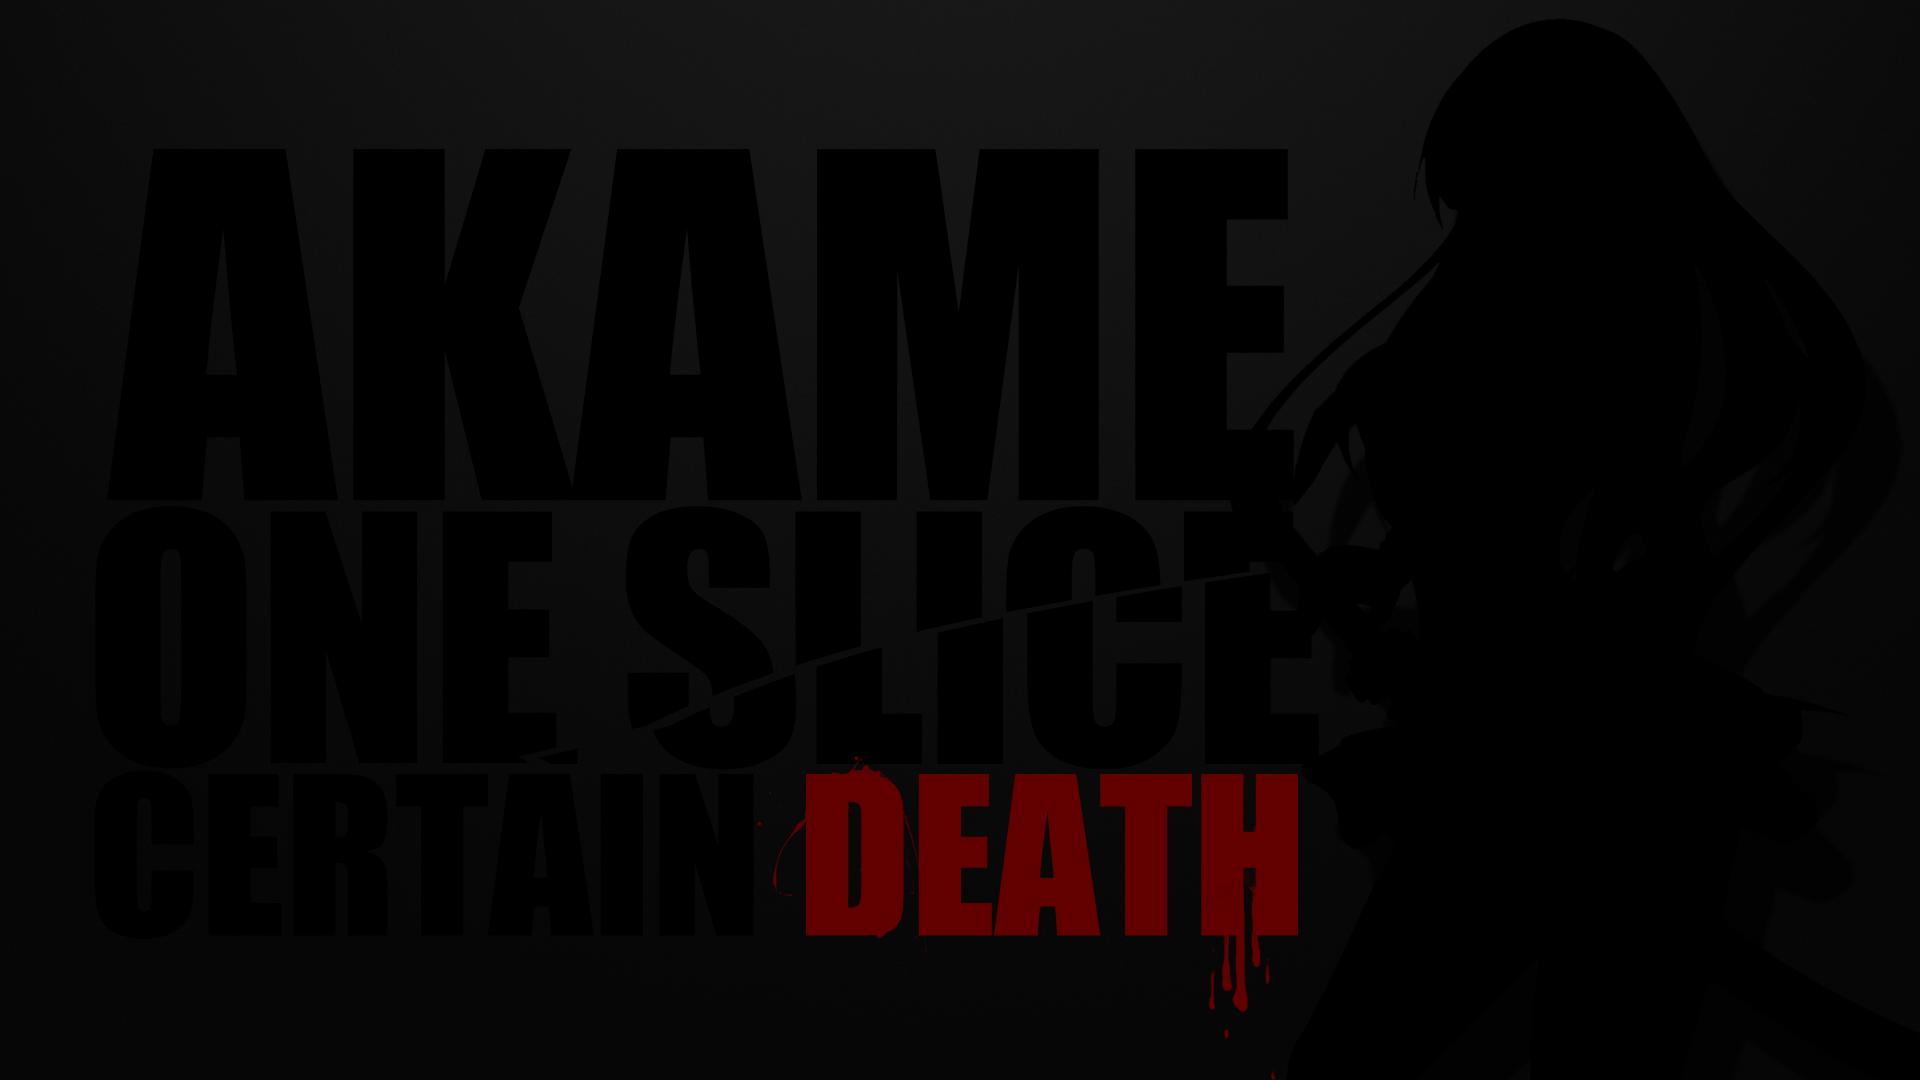 Akame Ga Kill! at 1280 x 960 size wallpapers HD quality